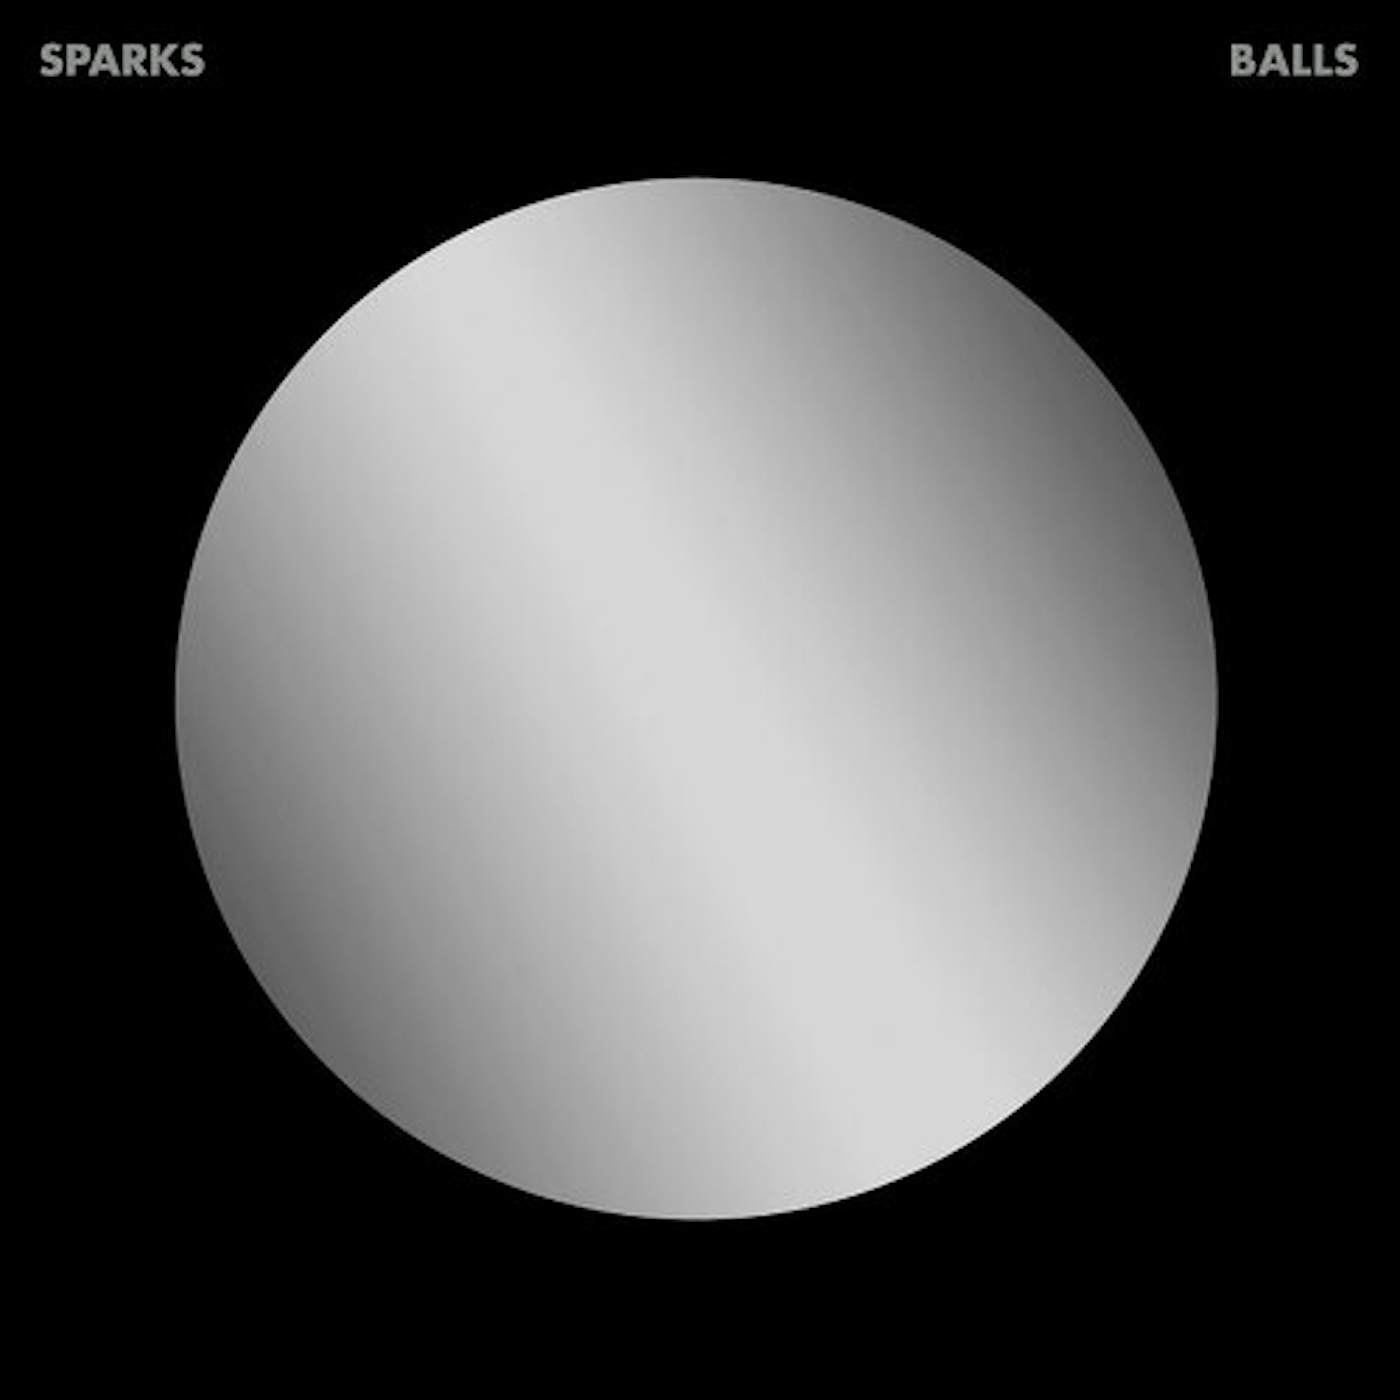 Sparks BALLS (2LP) Vinyl Record